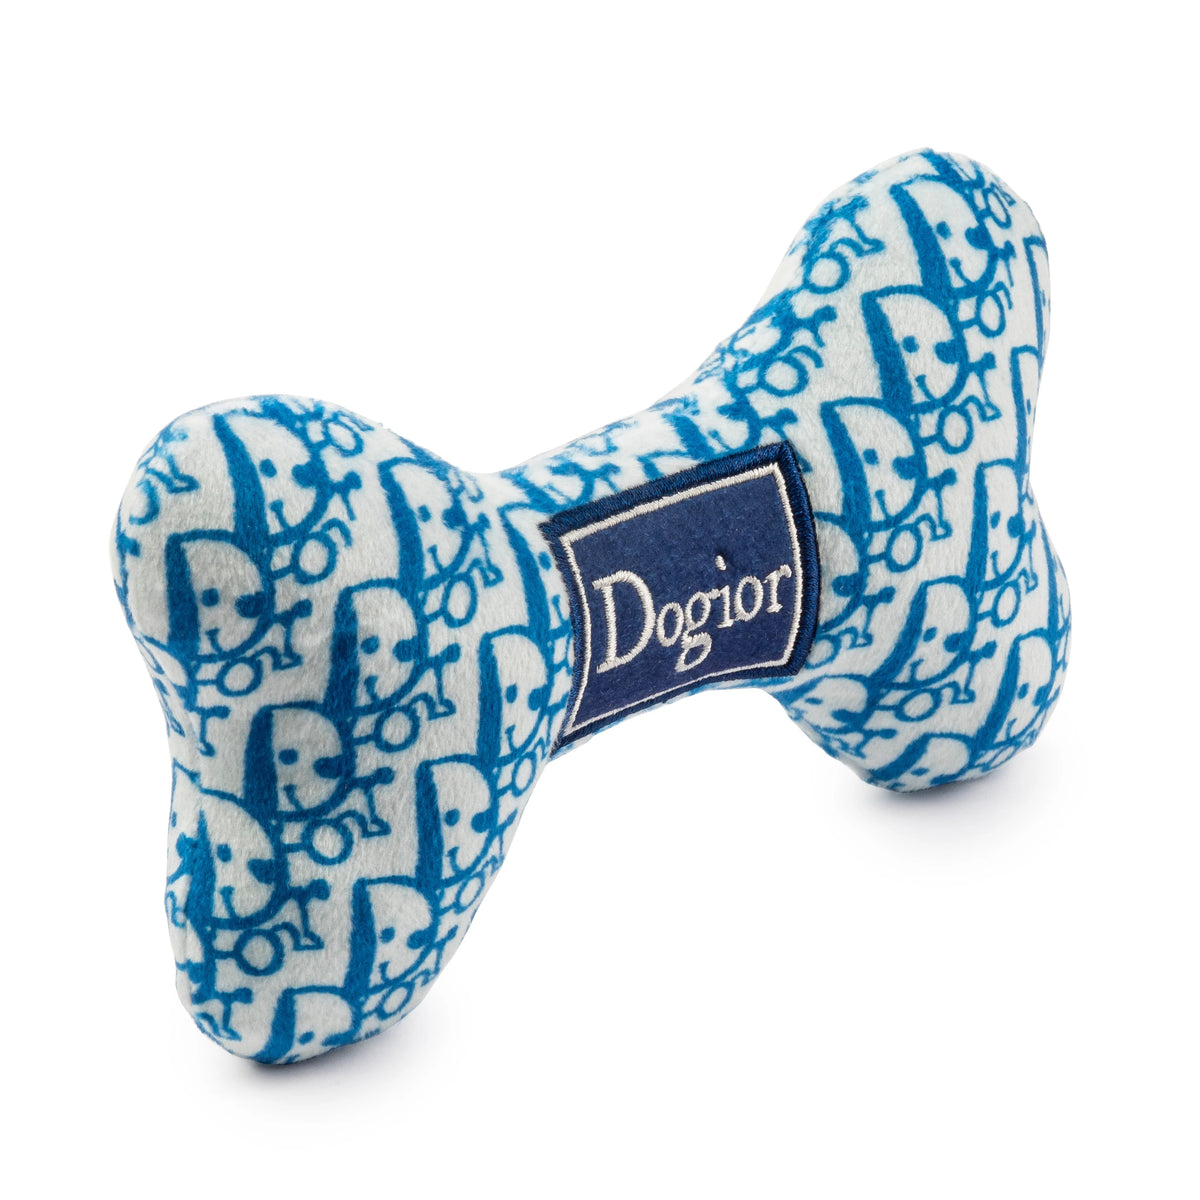 Haute Diggity Dog - Dogior Bone Dog Toy